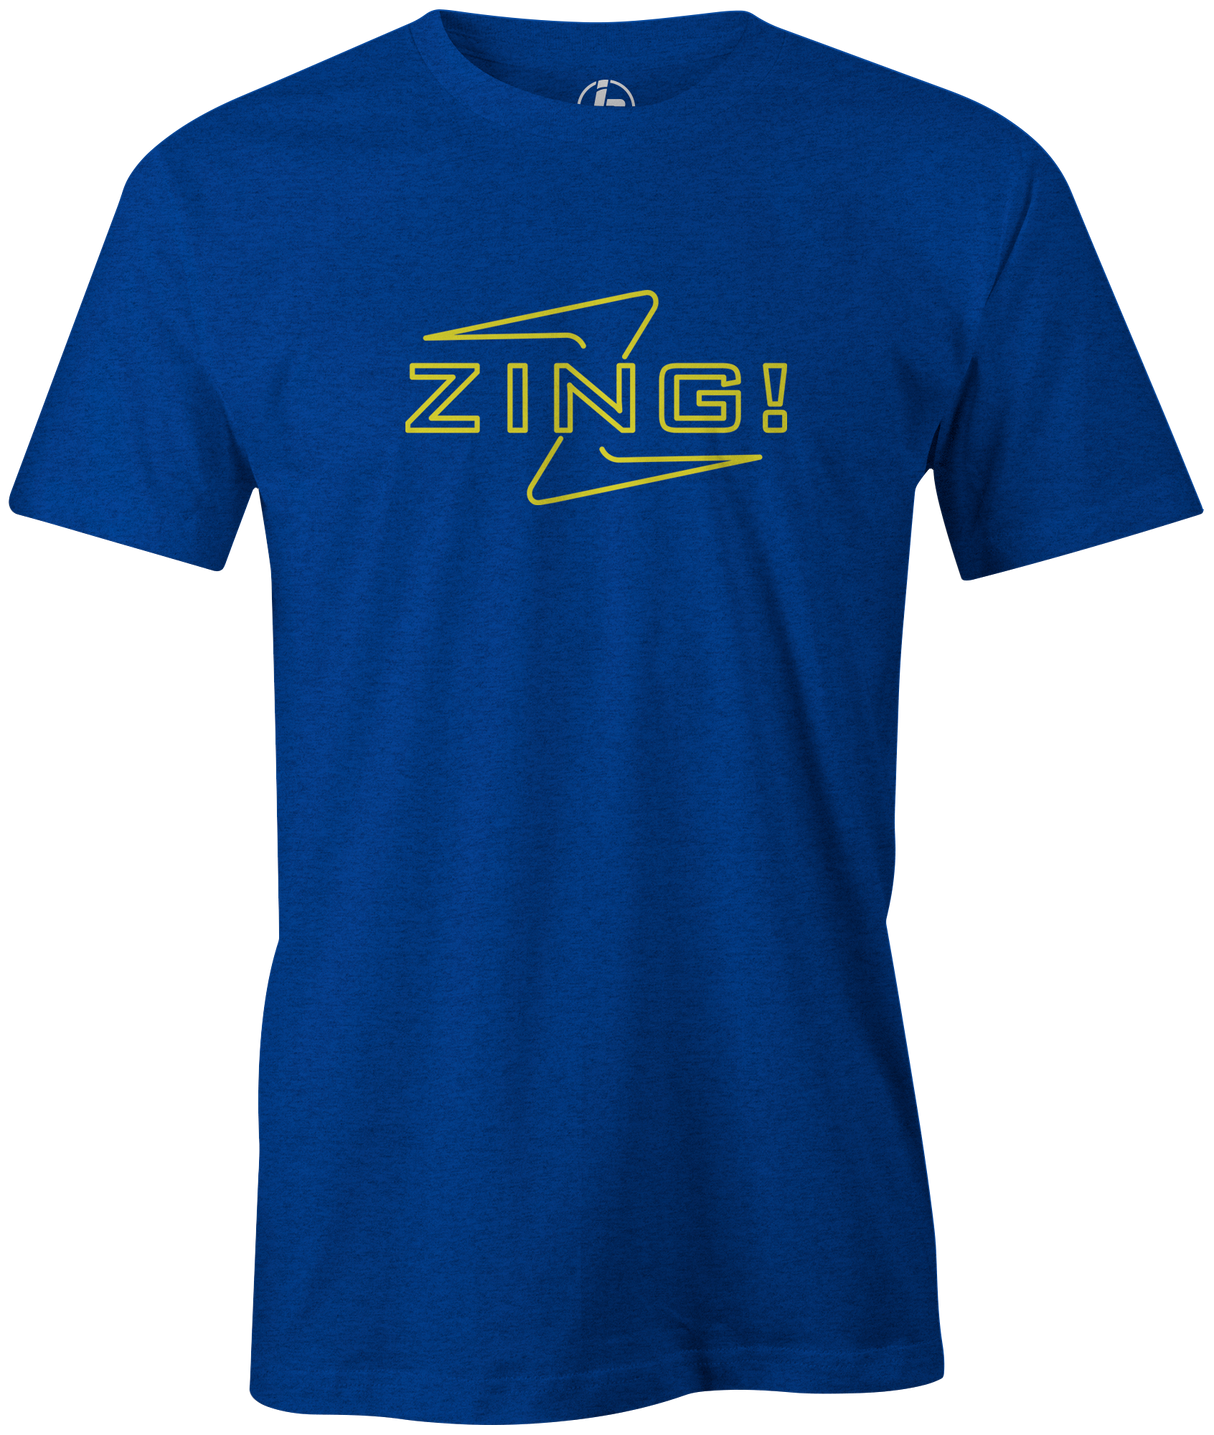 Men's Radical Zing T-Shirt, Blue, bowling, bowling ball, tee, tee shirt, tee-shirt, t shirt, t-shirt, tees, league bowling team shirt, tournament shirt, funny, cool, awesome, brunswick, brand